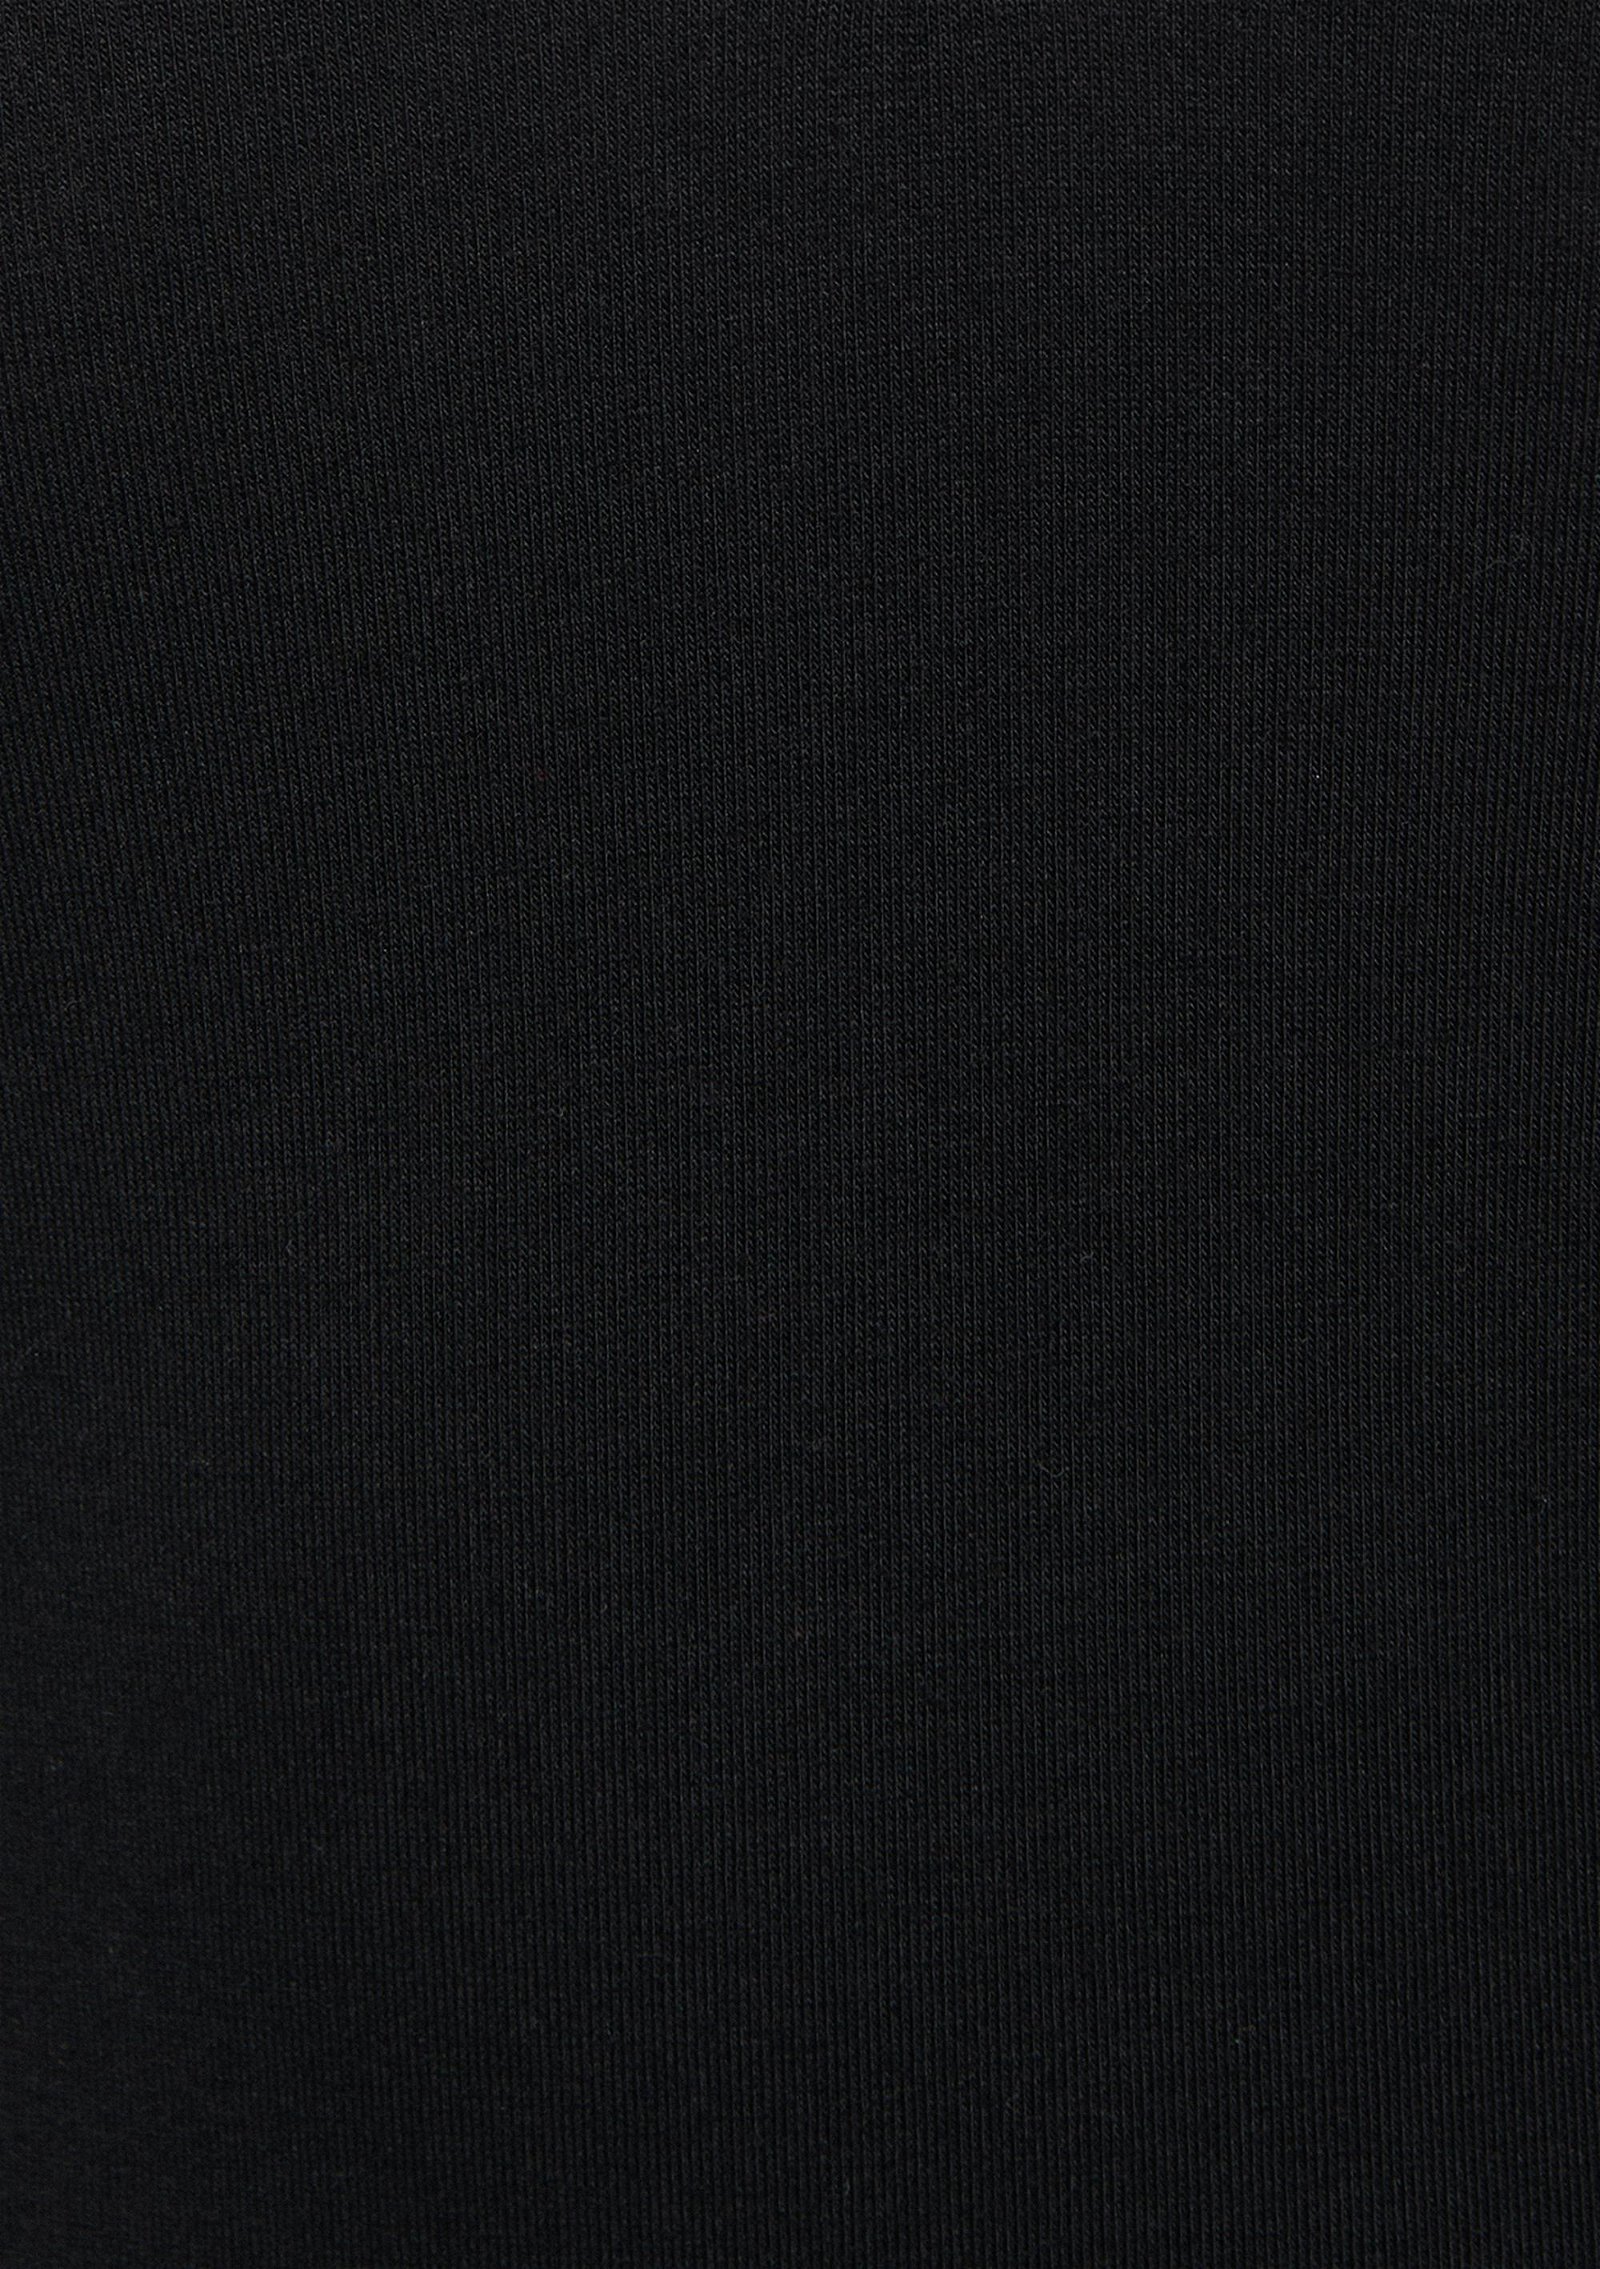 Mavi Lux Touch V Yaka Siyah Modal Tişört Fitted / Vücuda Oturan Kesim 1600964-900